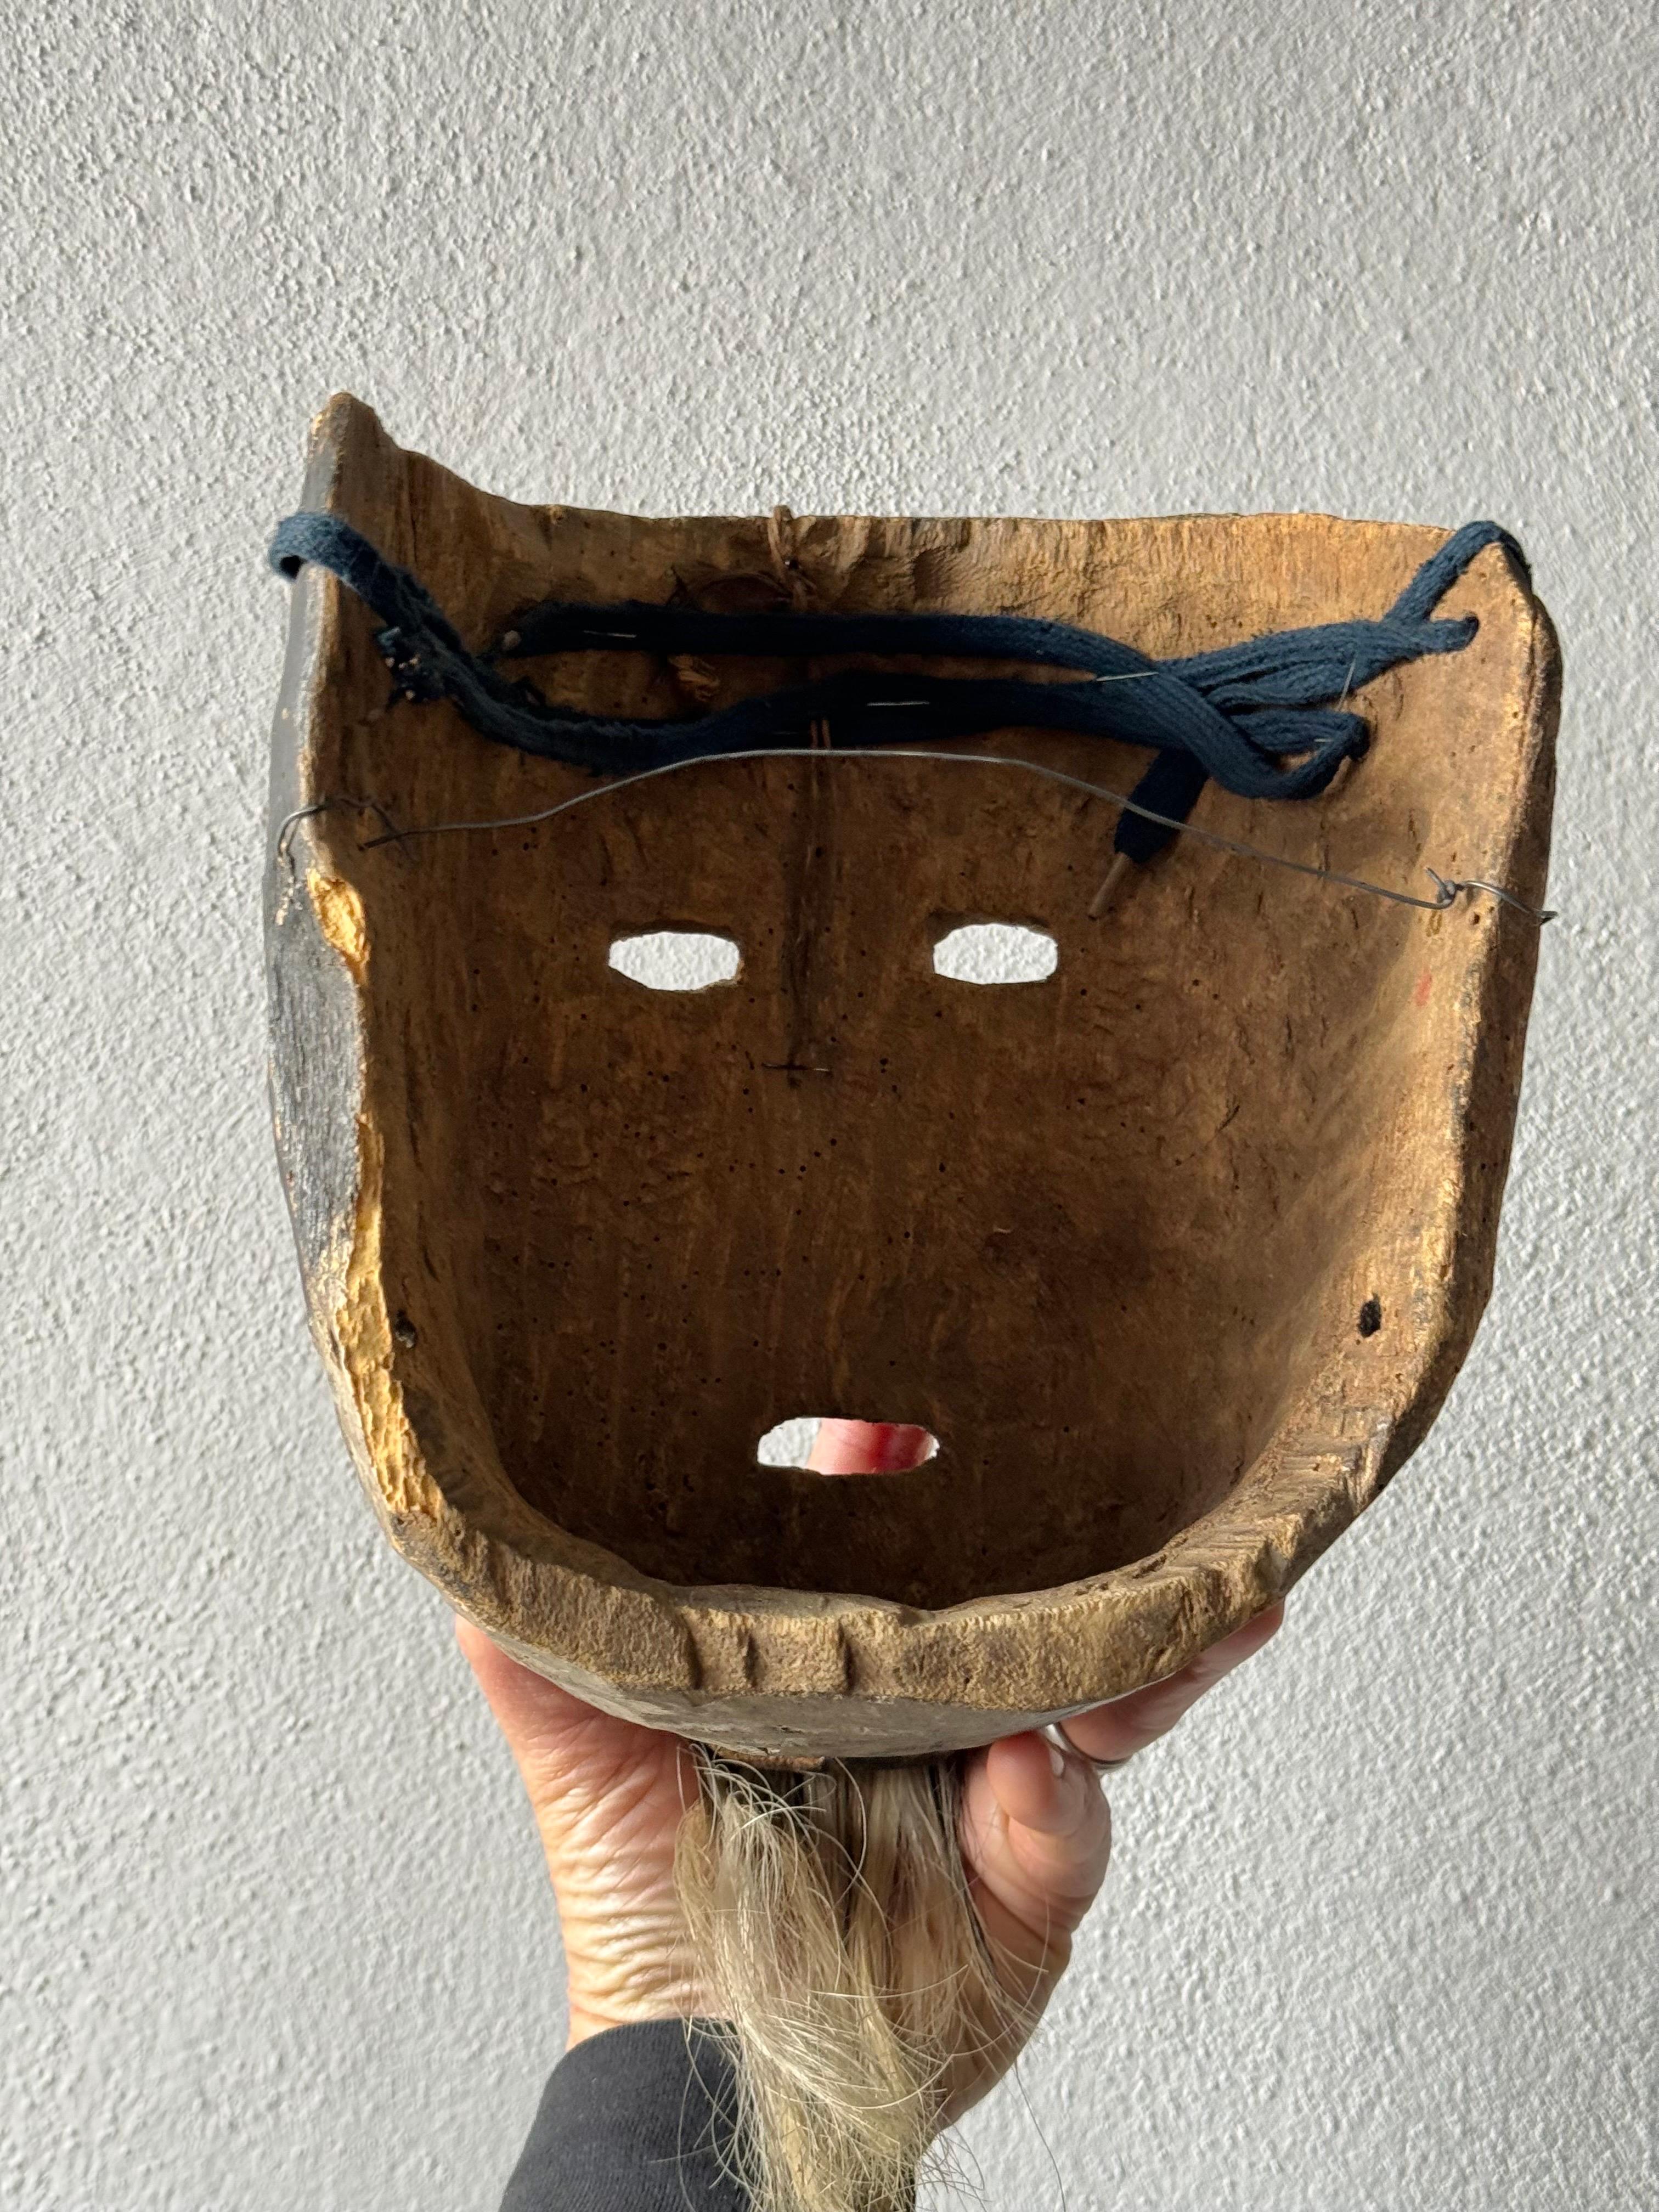 Xantolo Mask From The Huasteca Region Of Hidalgo, Mexico, 1970´s For Sale 1